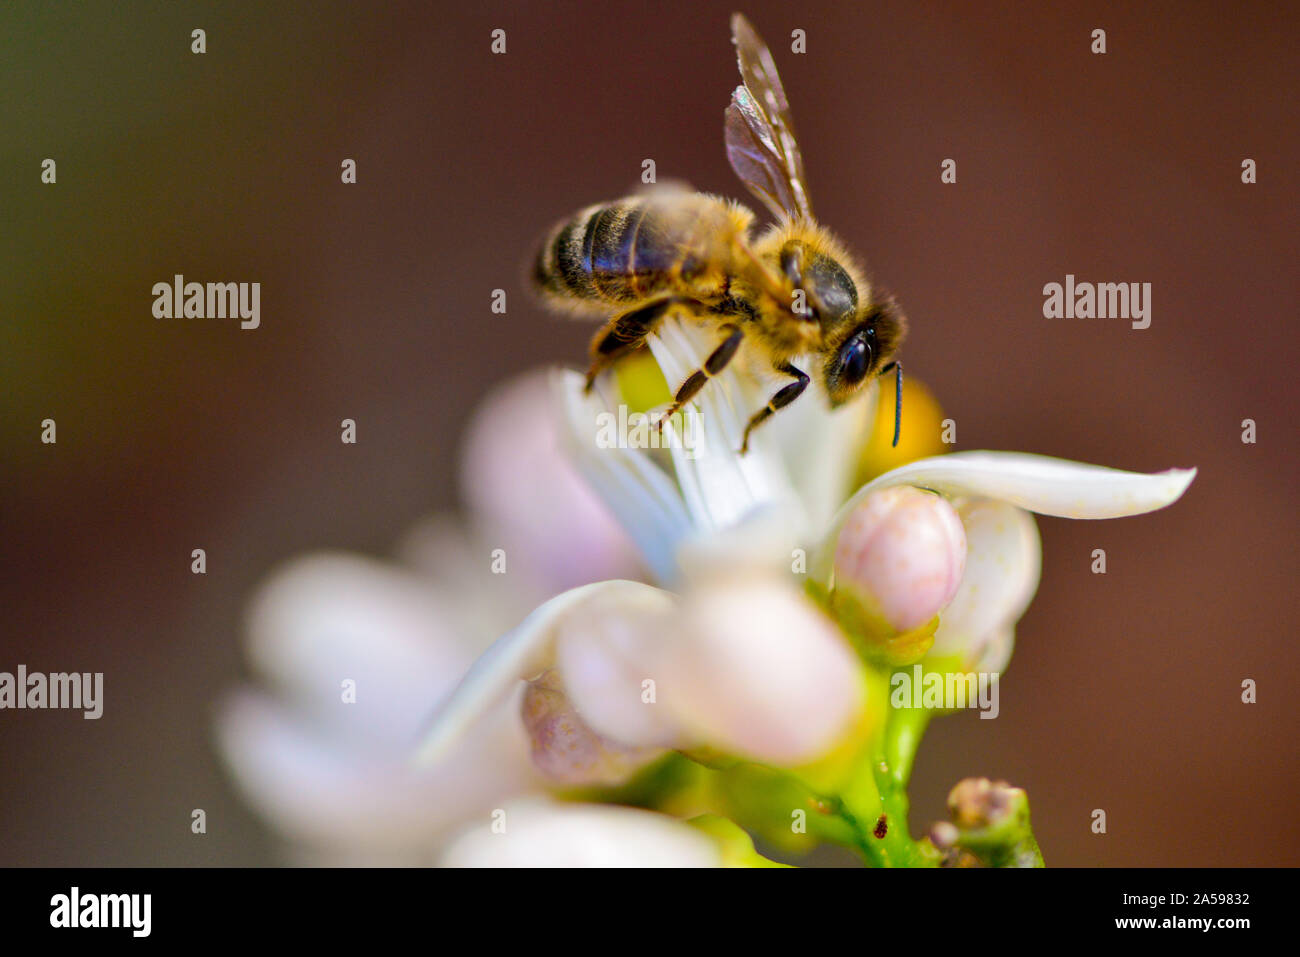 Australian native honey bee collecting pollen on orange blossom Stock Photo